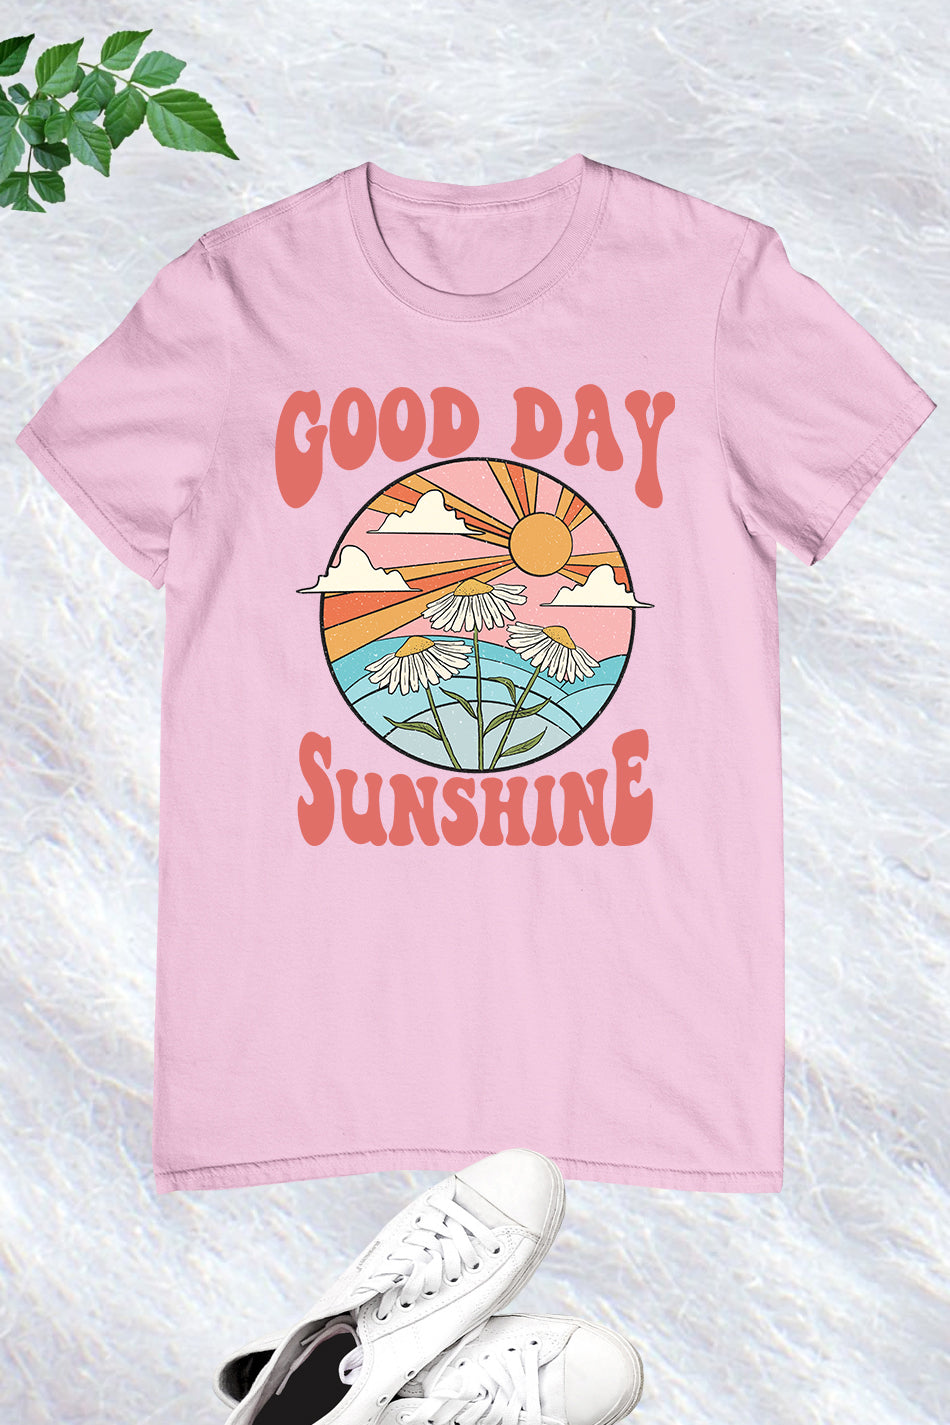 Good Day Sunshine Retro Shirts